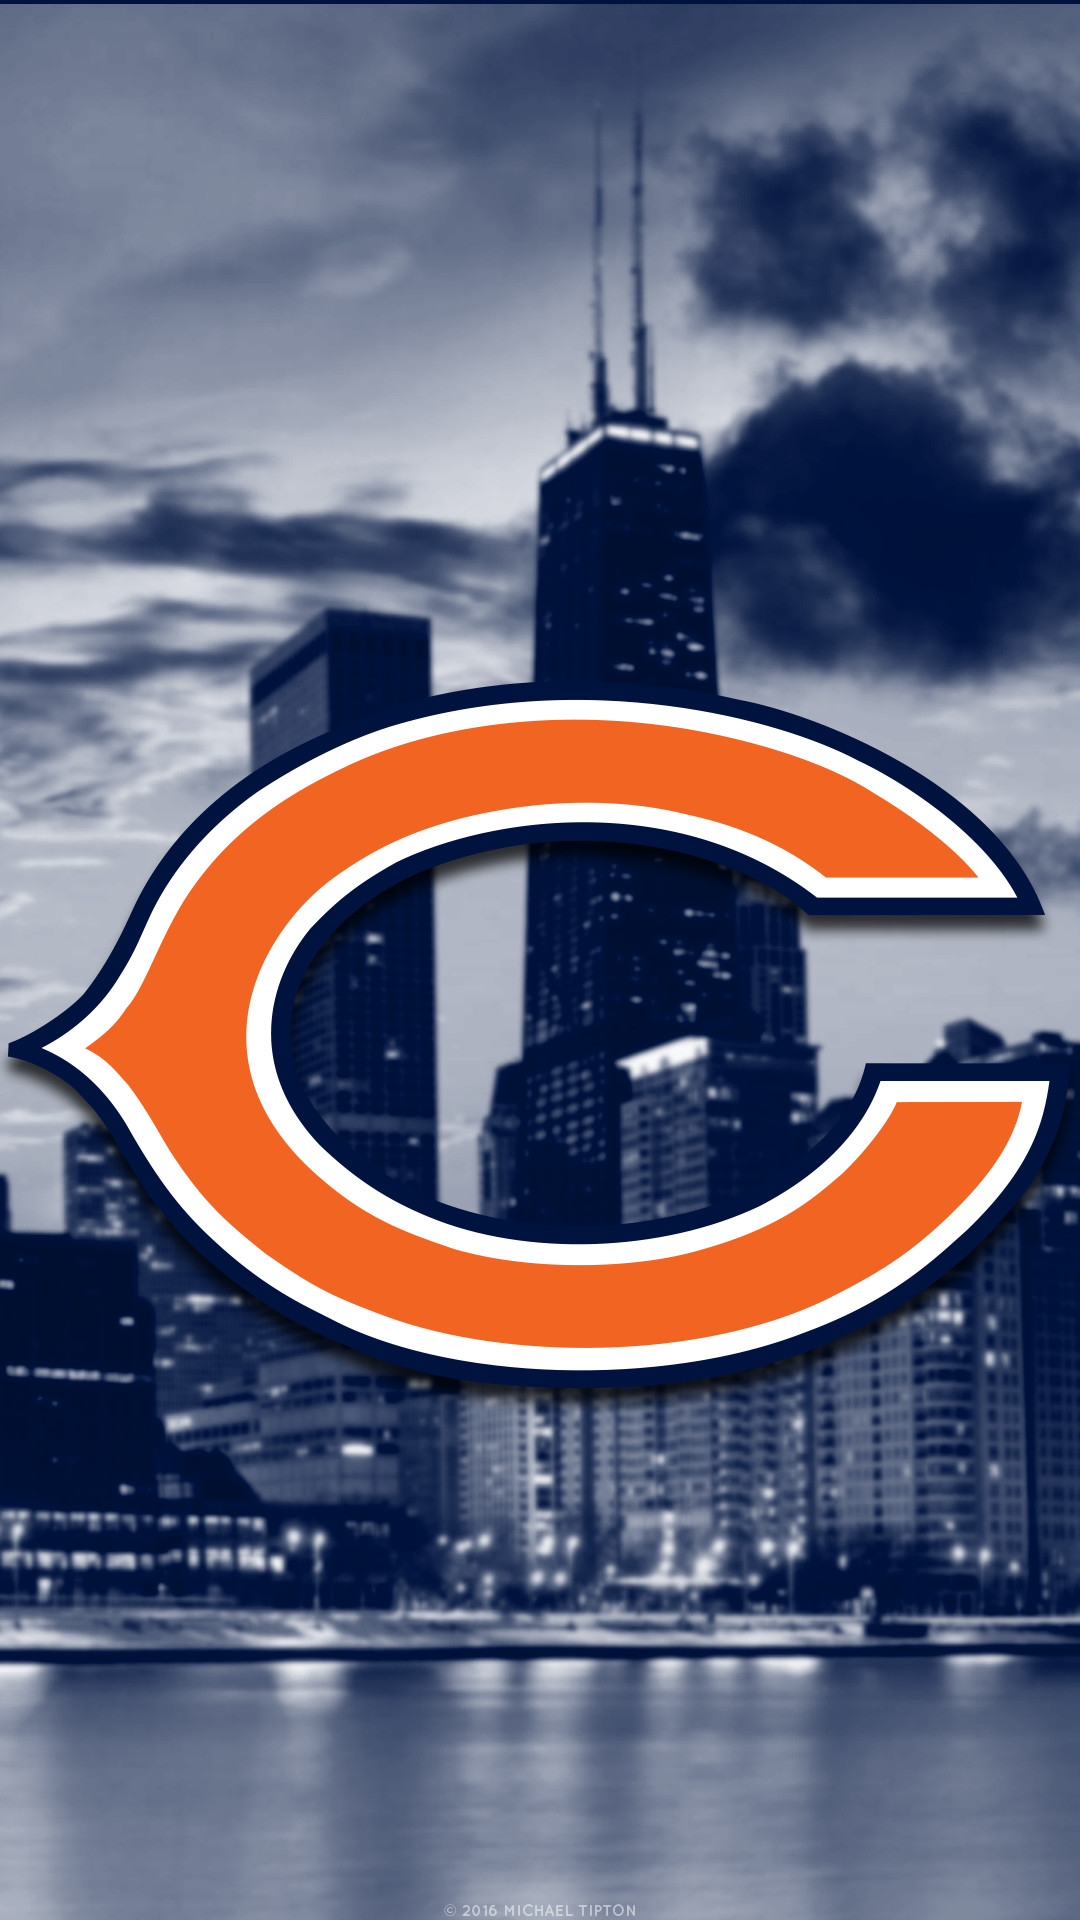 1080x1920 Chicago Bears 2017 football logo wallpaper pc desktop computer. Desktop PC  | iPhone | Android